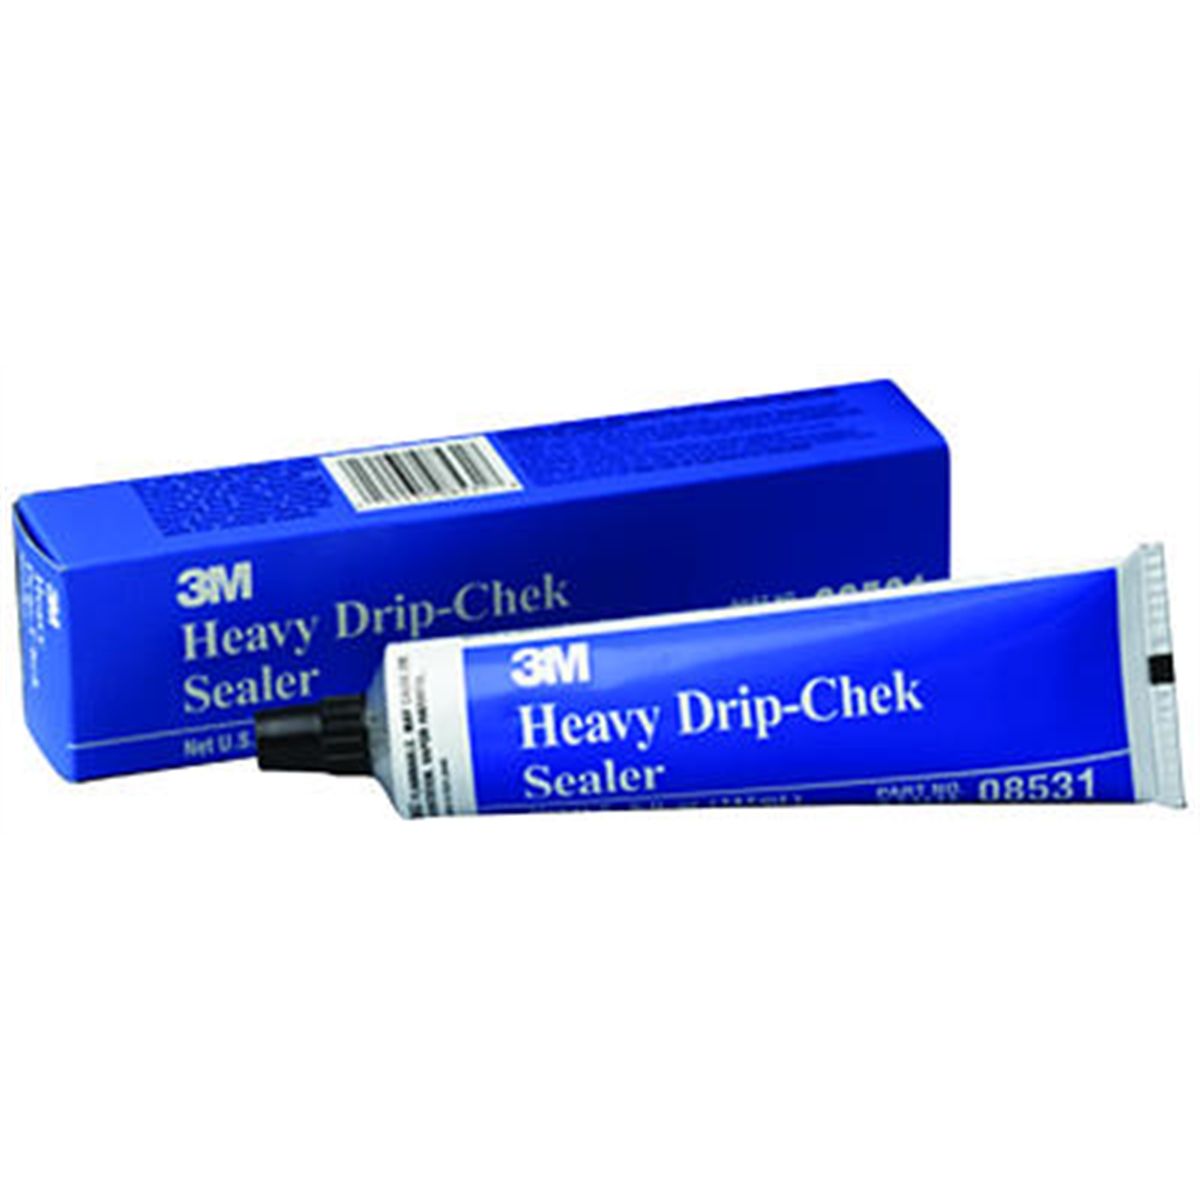 Heavy Drip-Chek Sealer